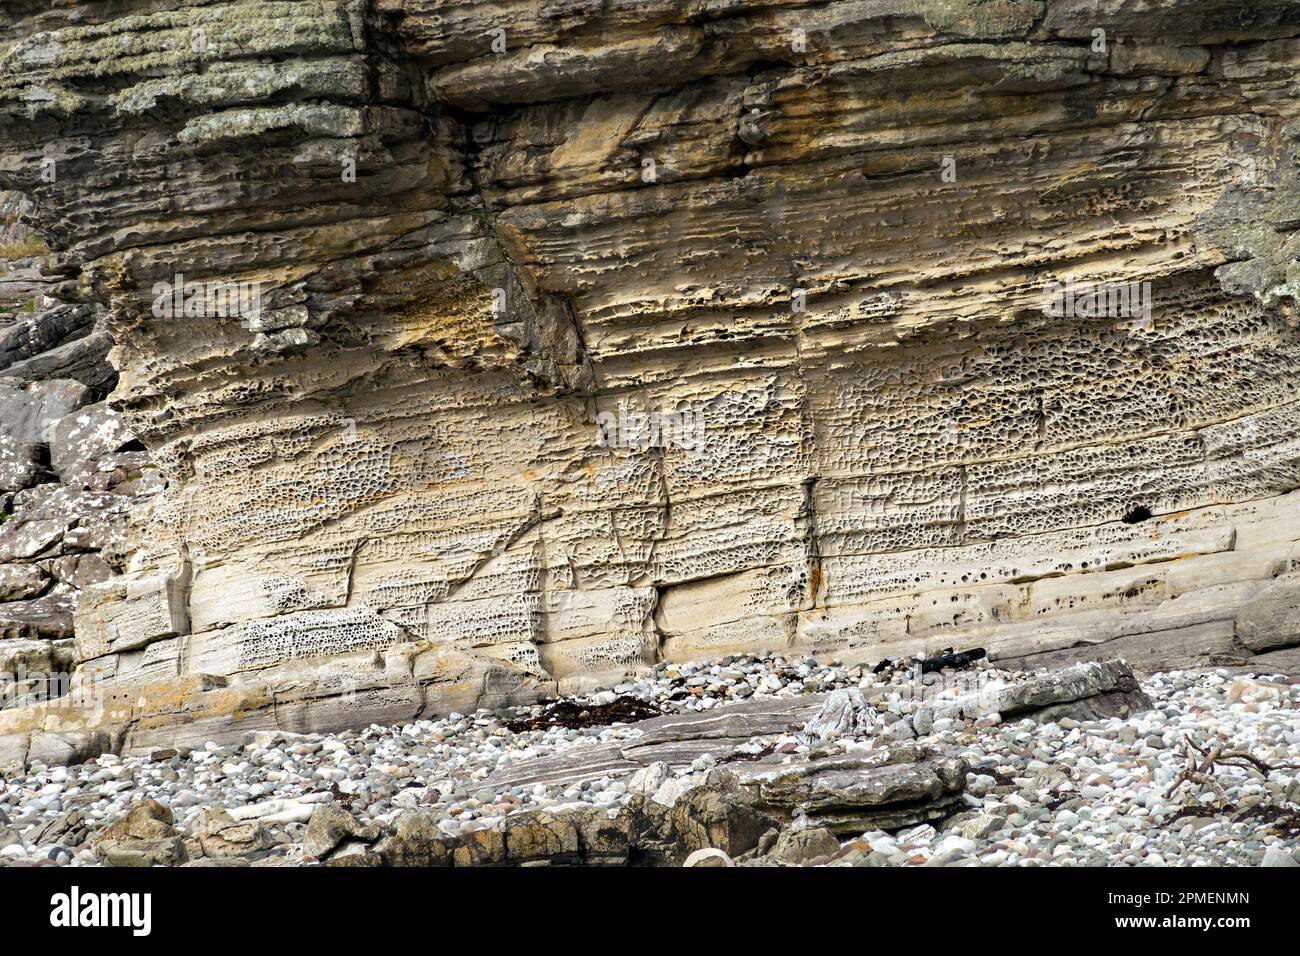 Honeycomb weathered sandstone rock cliffs at Elgol on the Isle of Skye, Scotland, UK Stock Photo